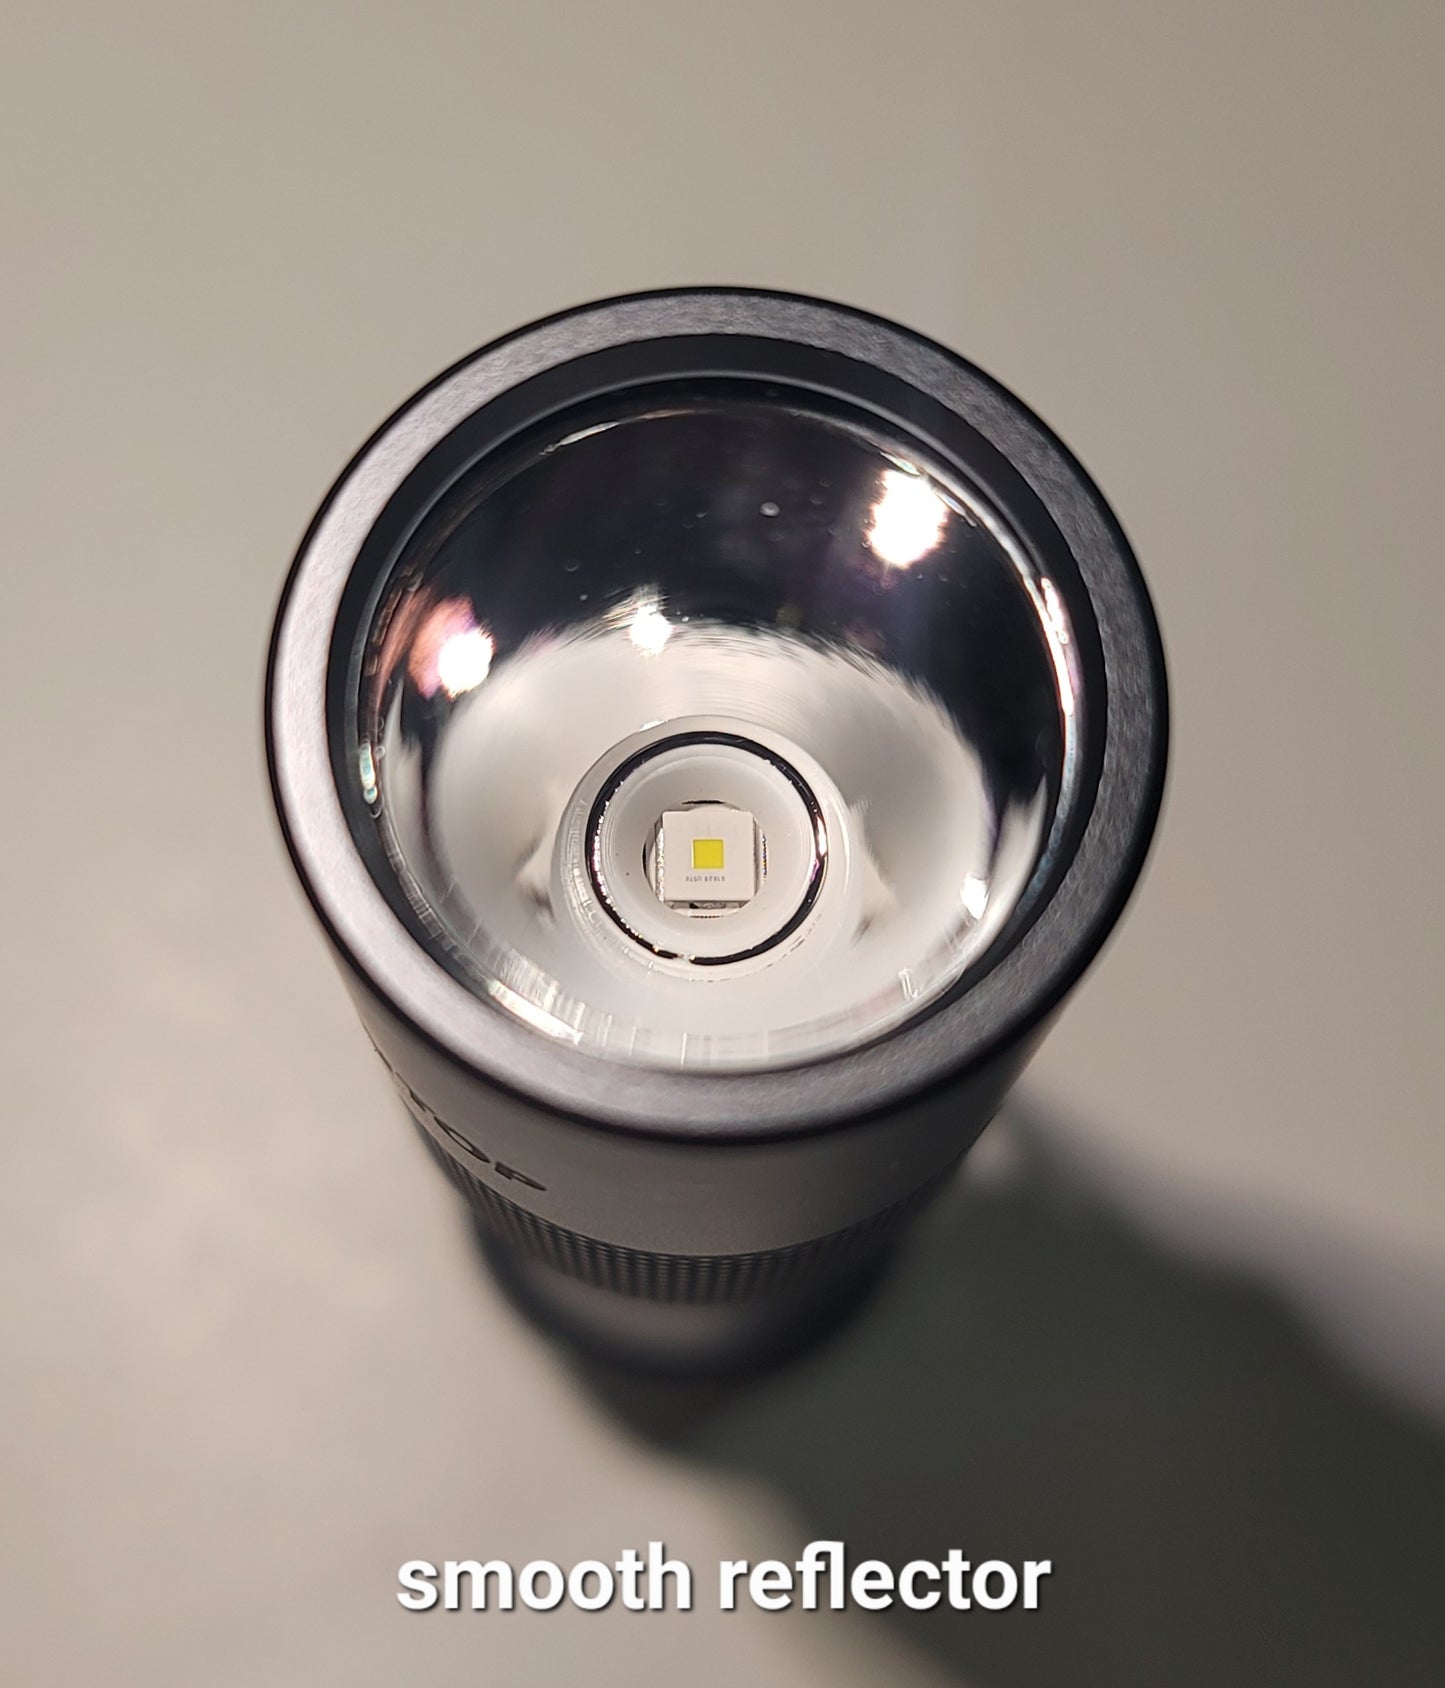 Lumintop FW1a Osram W1 High Power Compact LED Flashlight